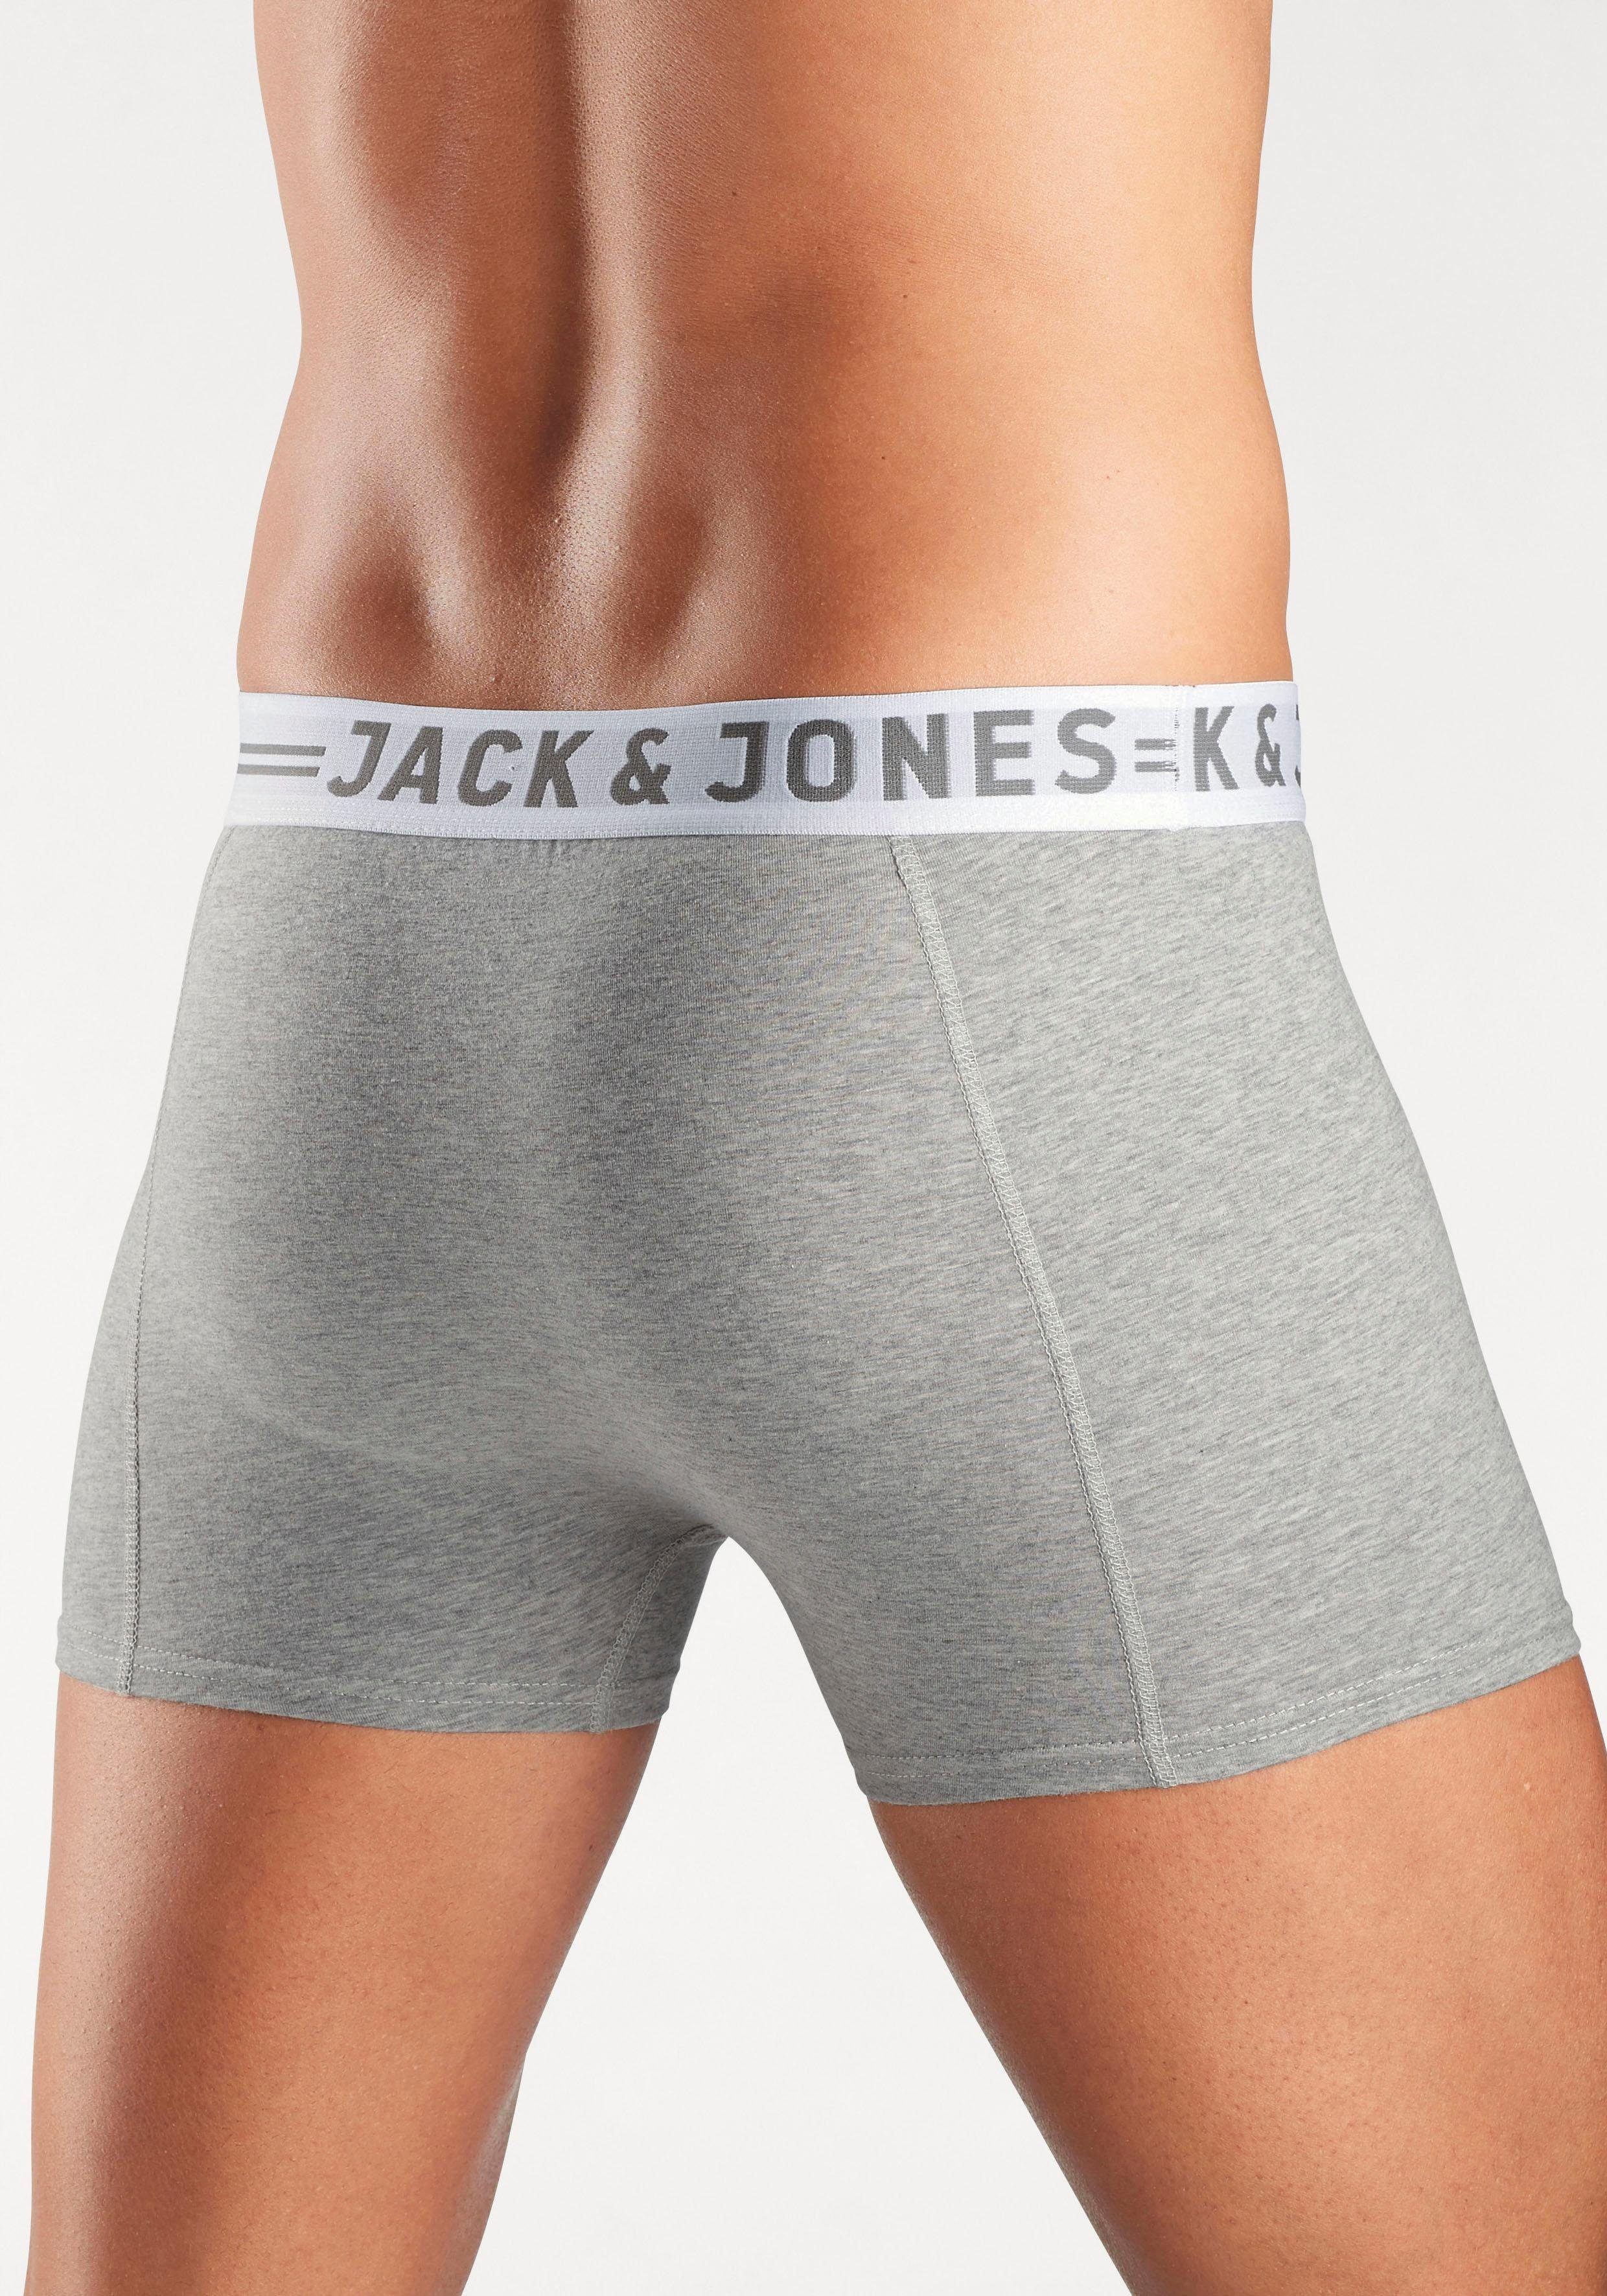 Jack & Jones Boxer Sense grau-meliert (Packung, 3-St) Trunks weiß, schwarz